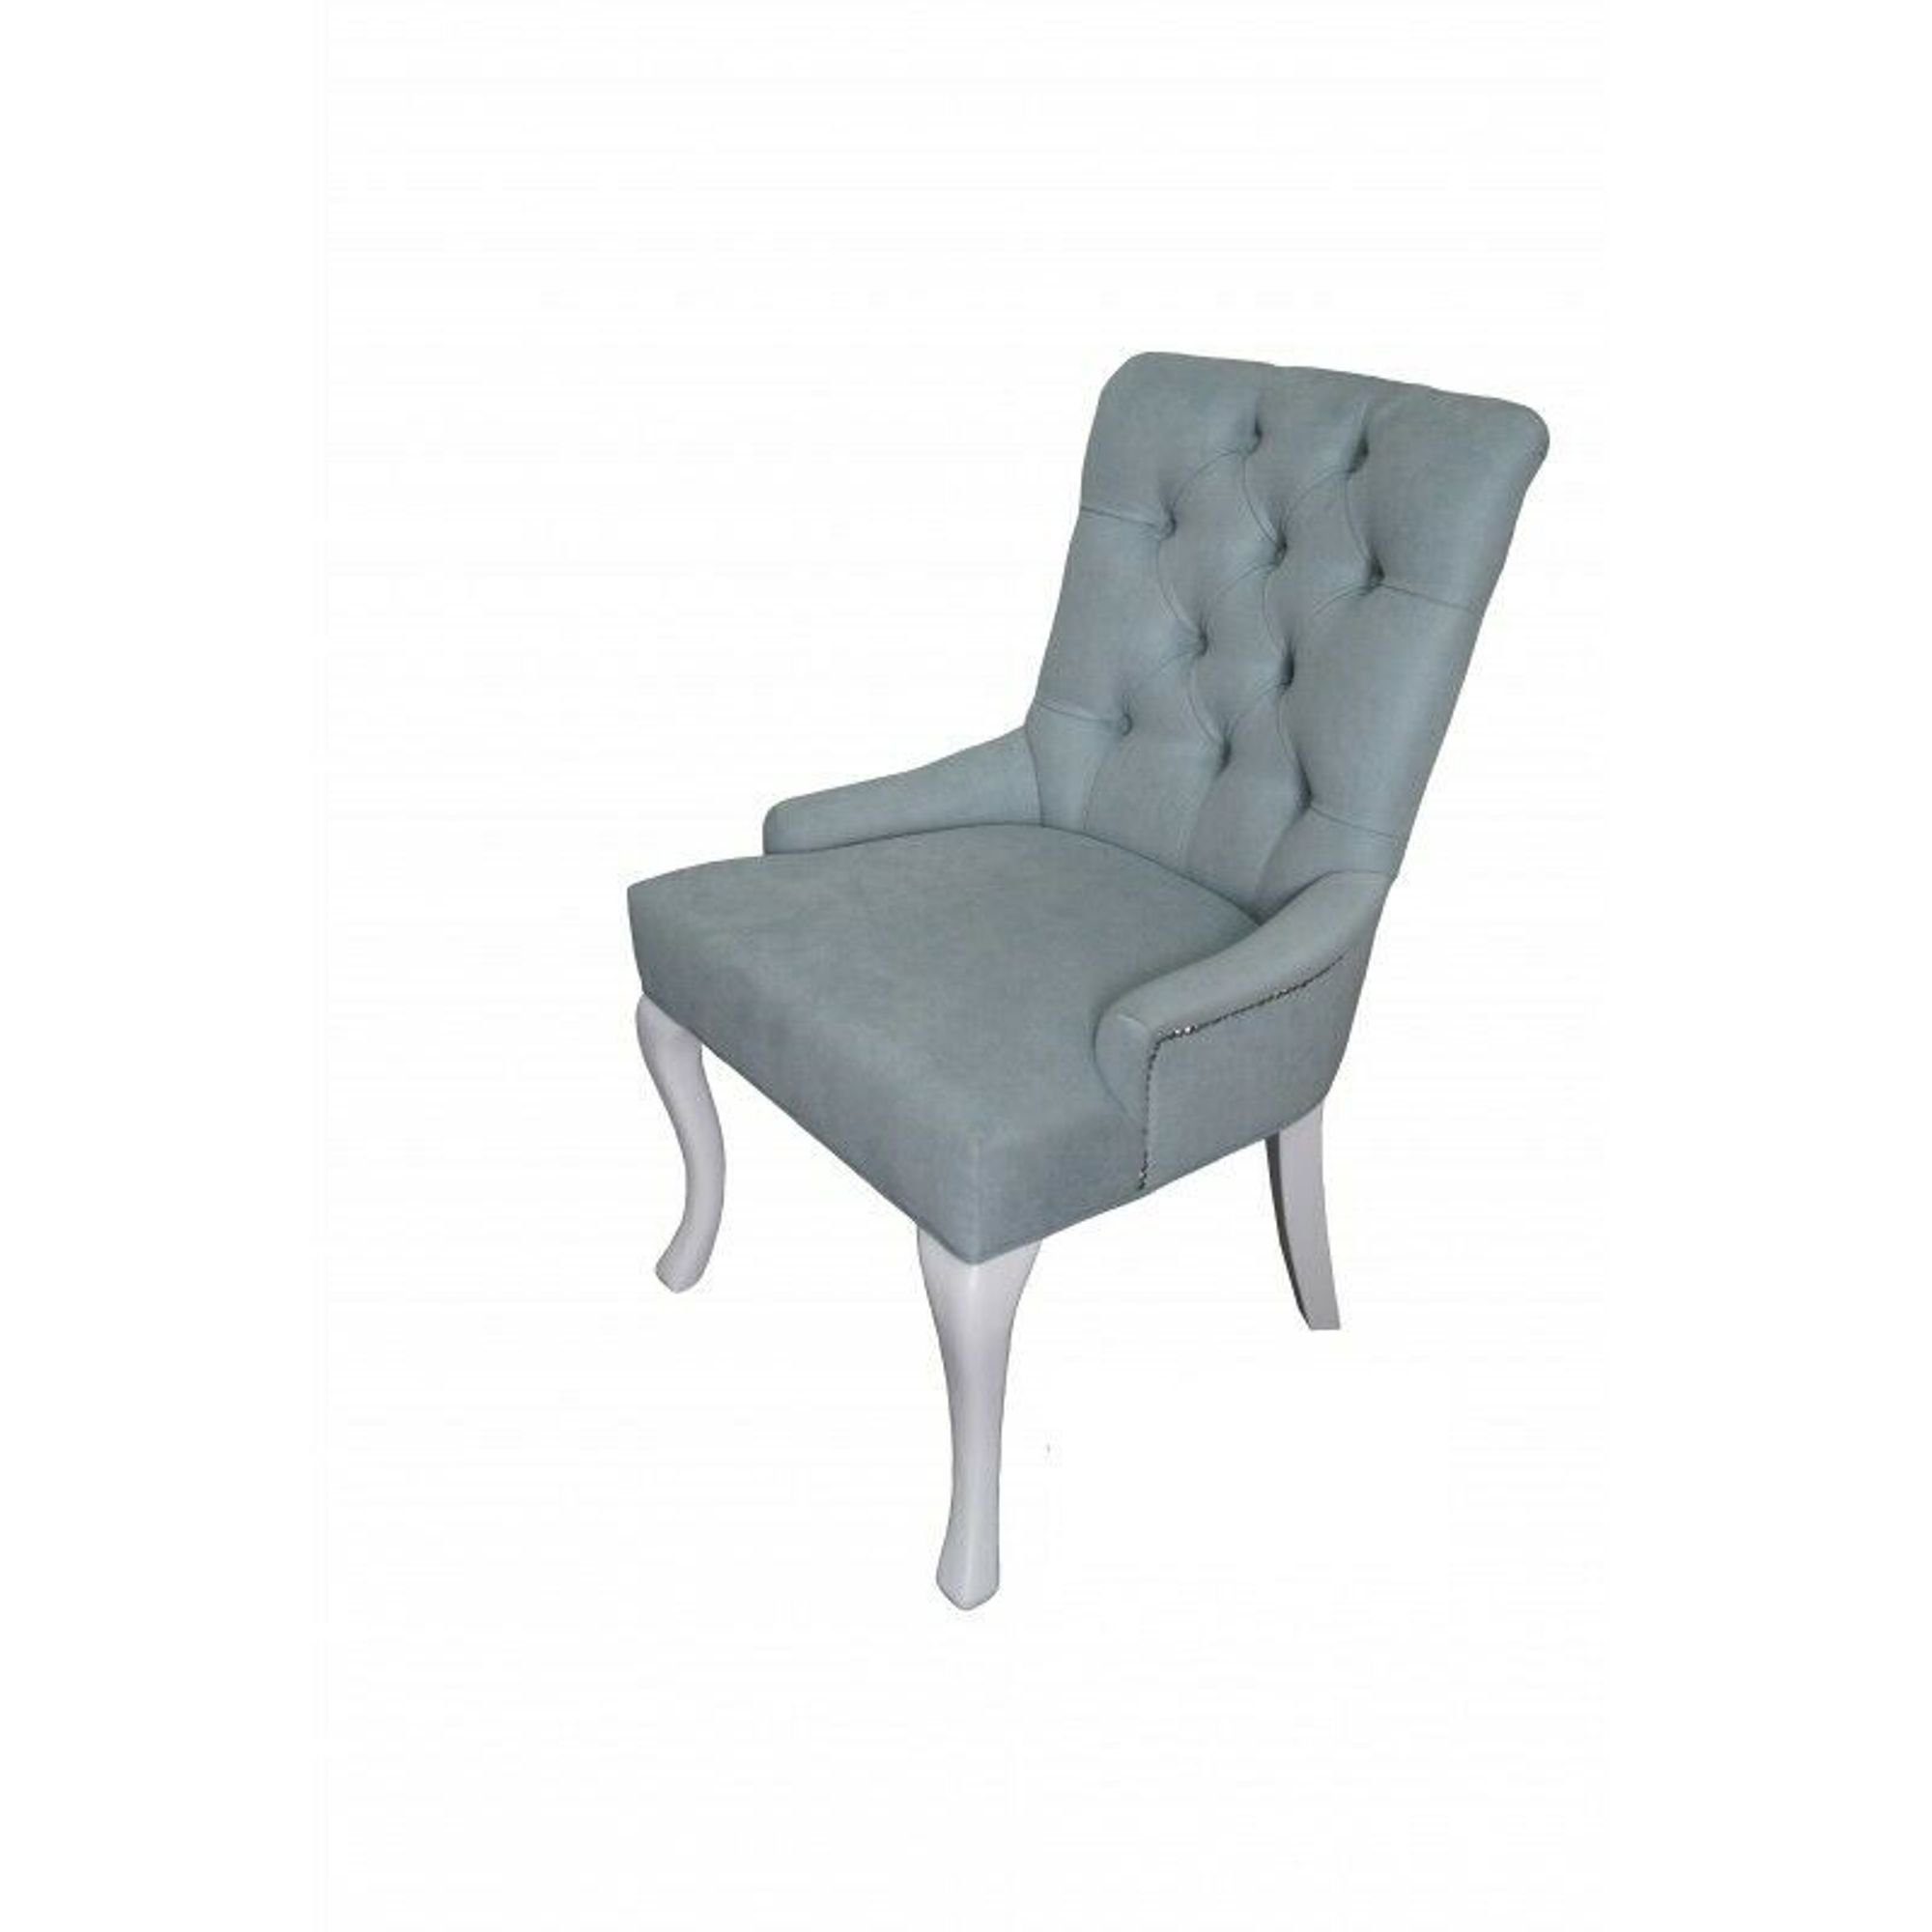 Textil Stühle 8xSet JVmoebel Stuhl Garnitur Chesterfield Hotel Grau Polster Gruppe Stuhl, Design Neu